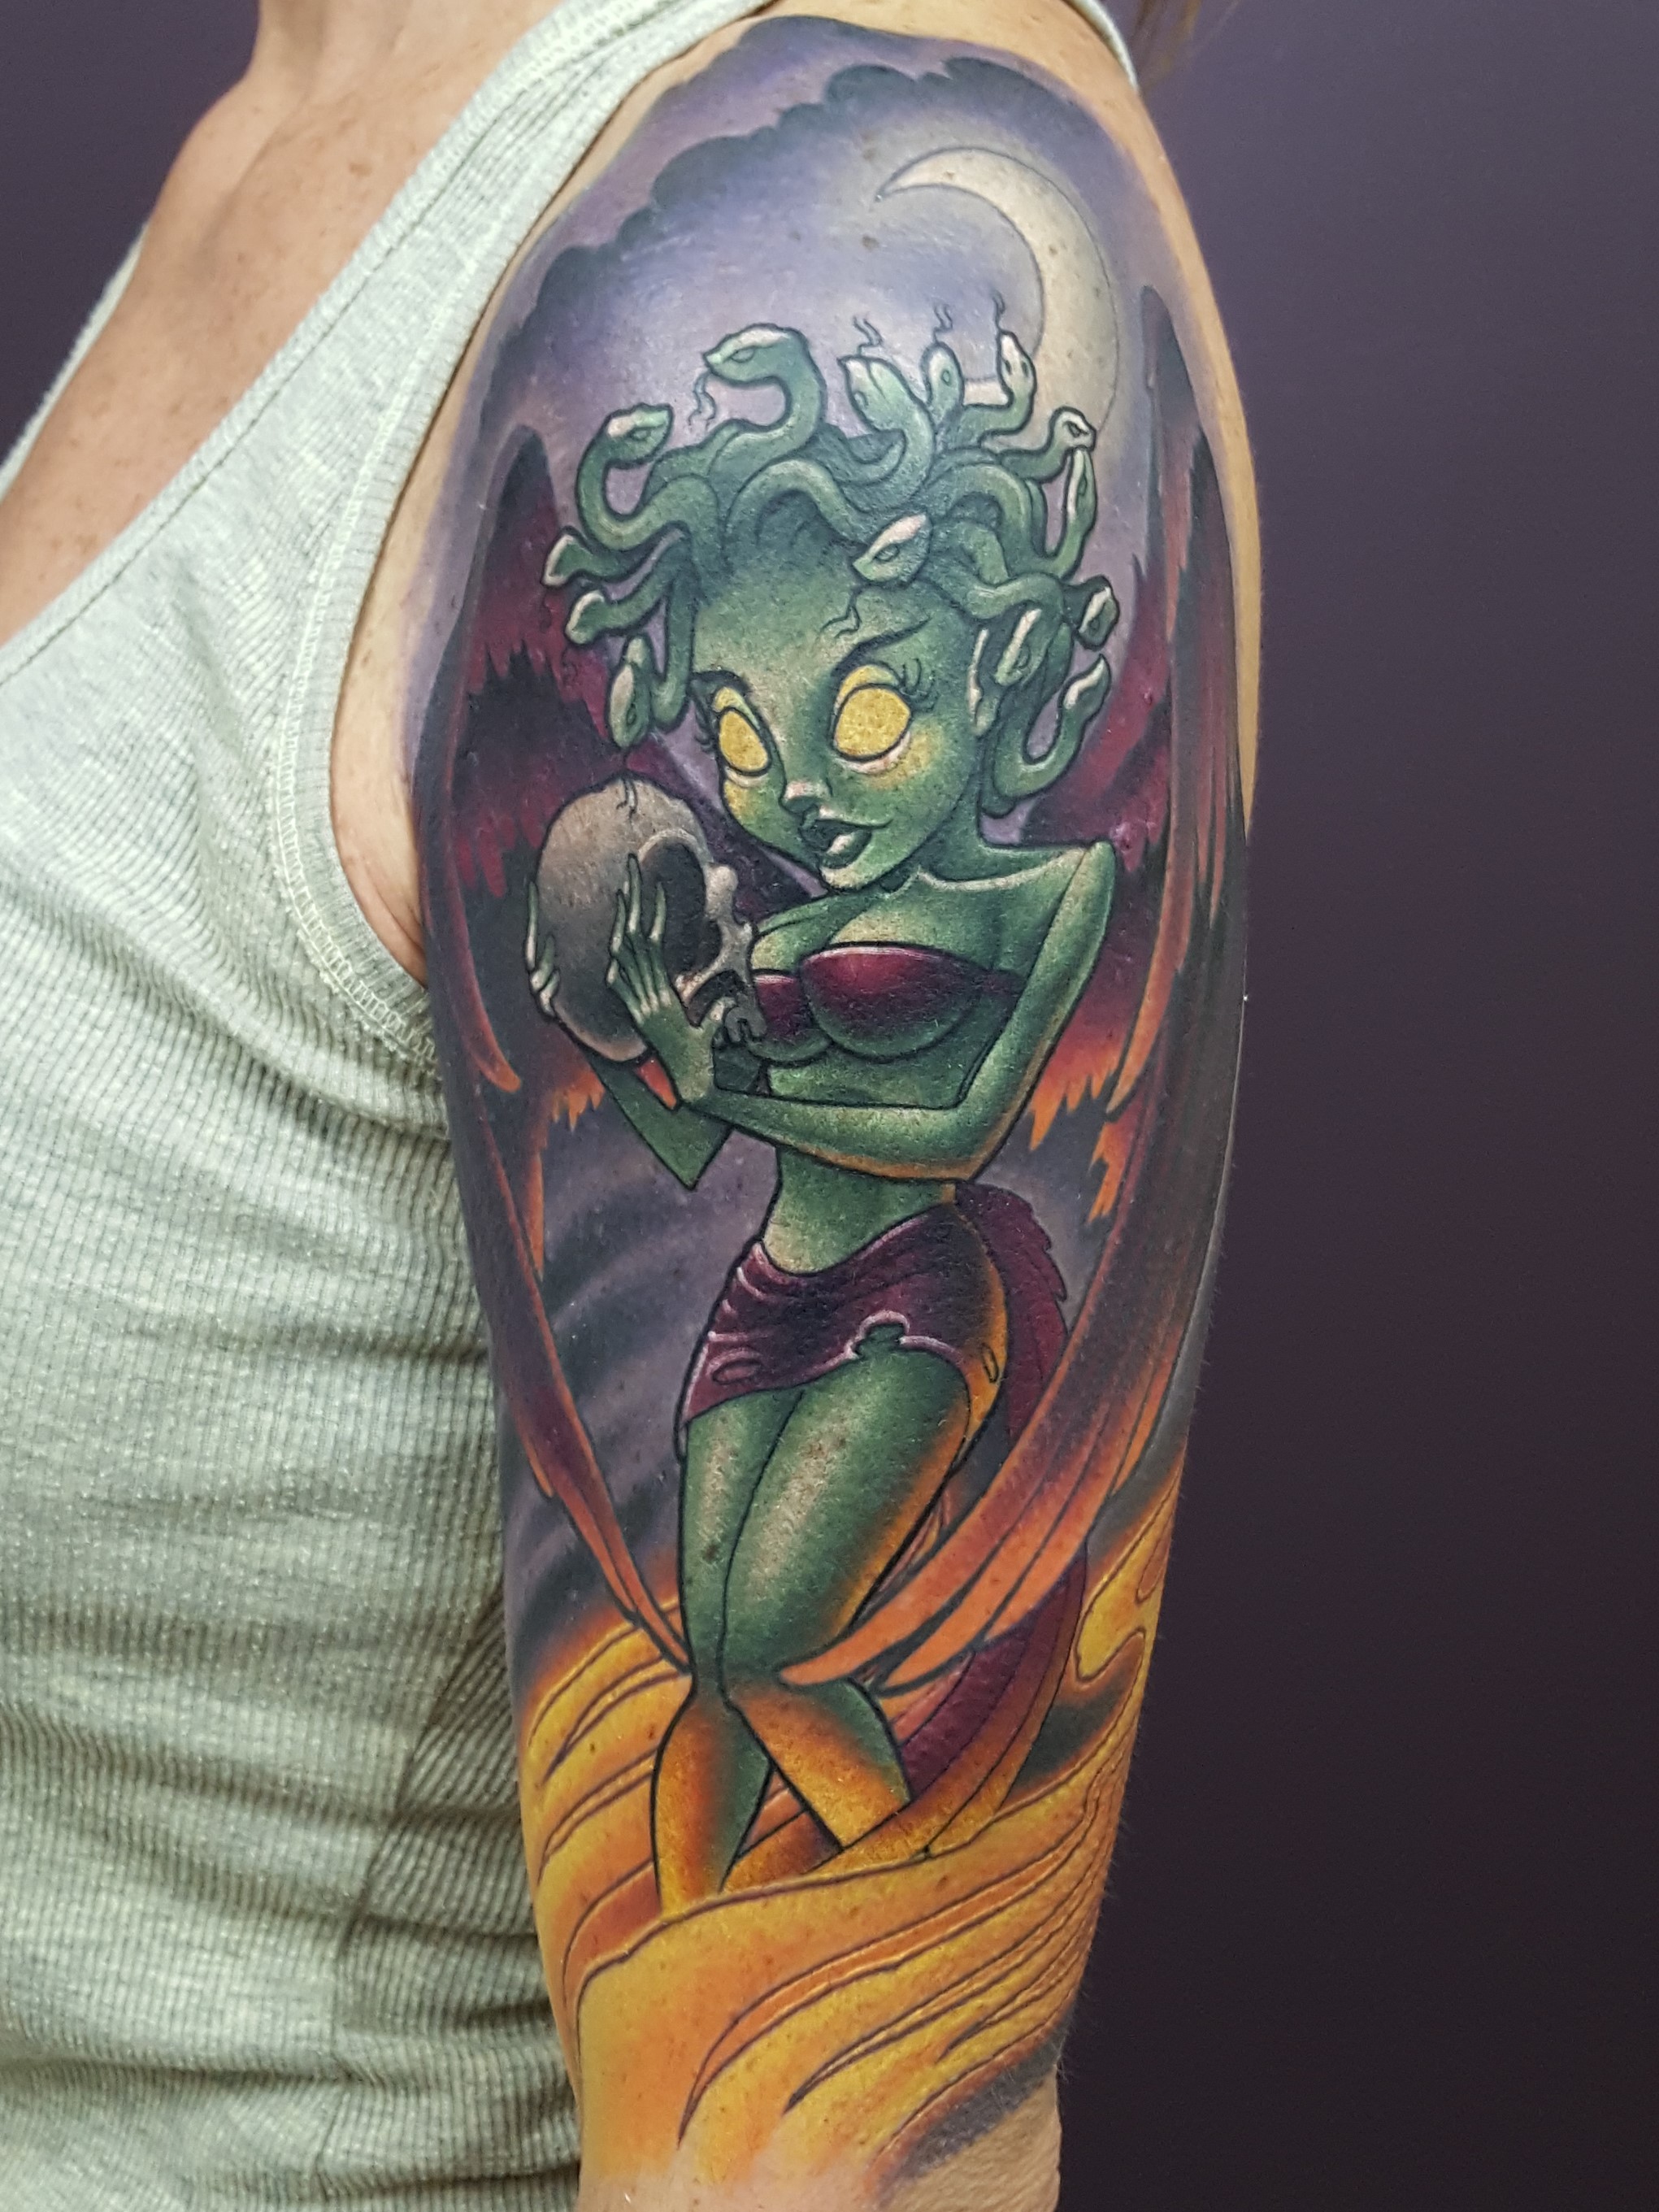 Medusa Tattoo Sleeve done by tattooist Cracker Joe Swider in CT